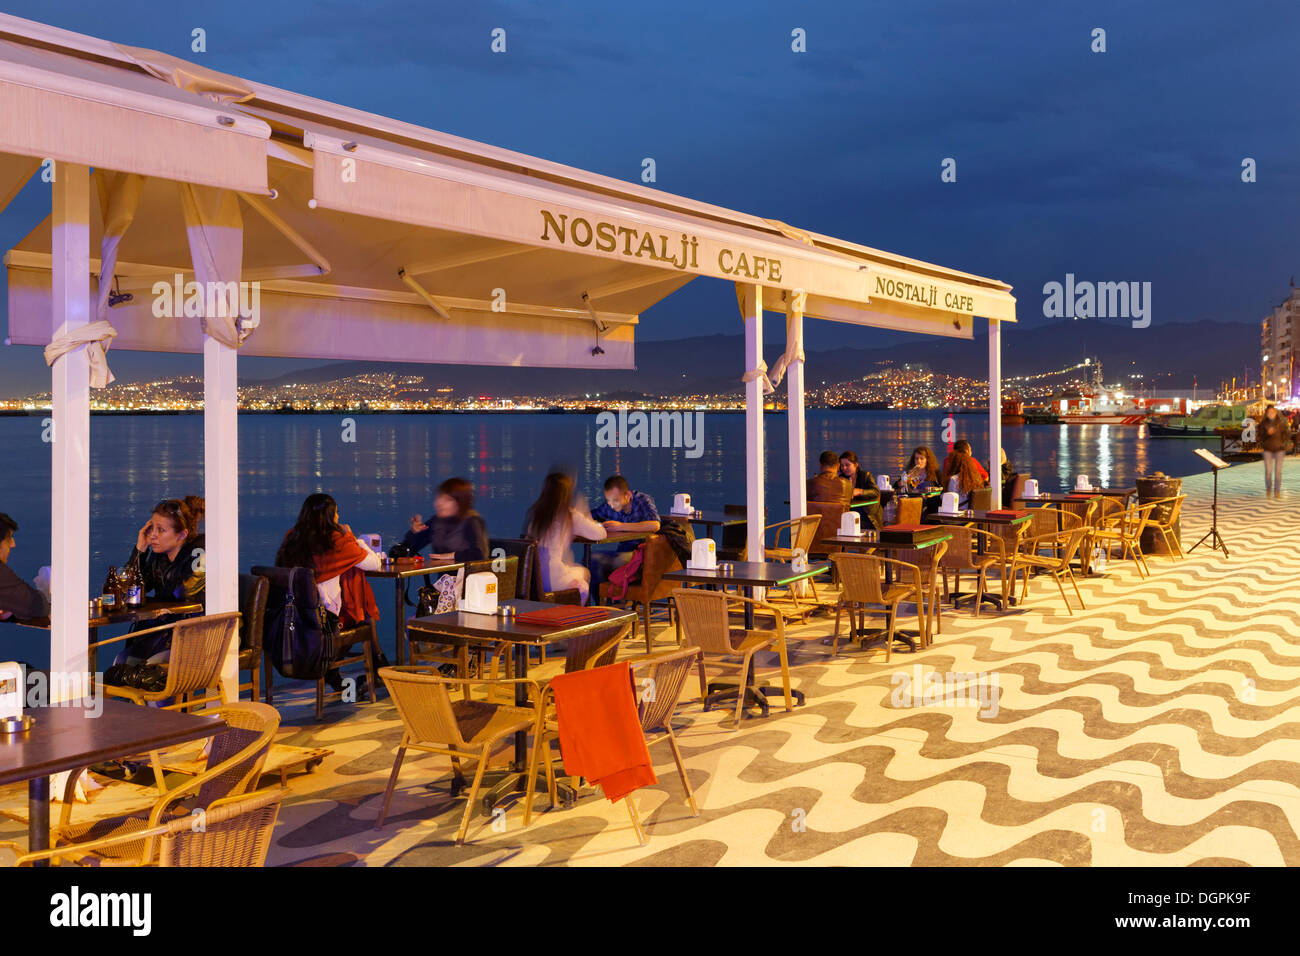 Nostalji Cafe on the promenade, Konak, Izmir, İzmir Province, Aegean Region, Turkey Stock Photo